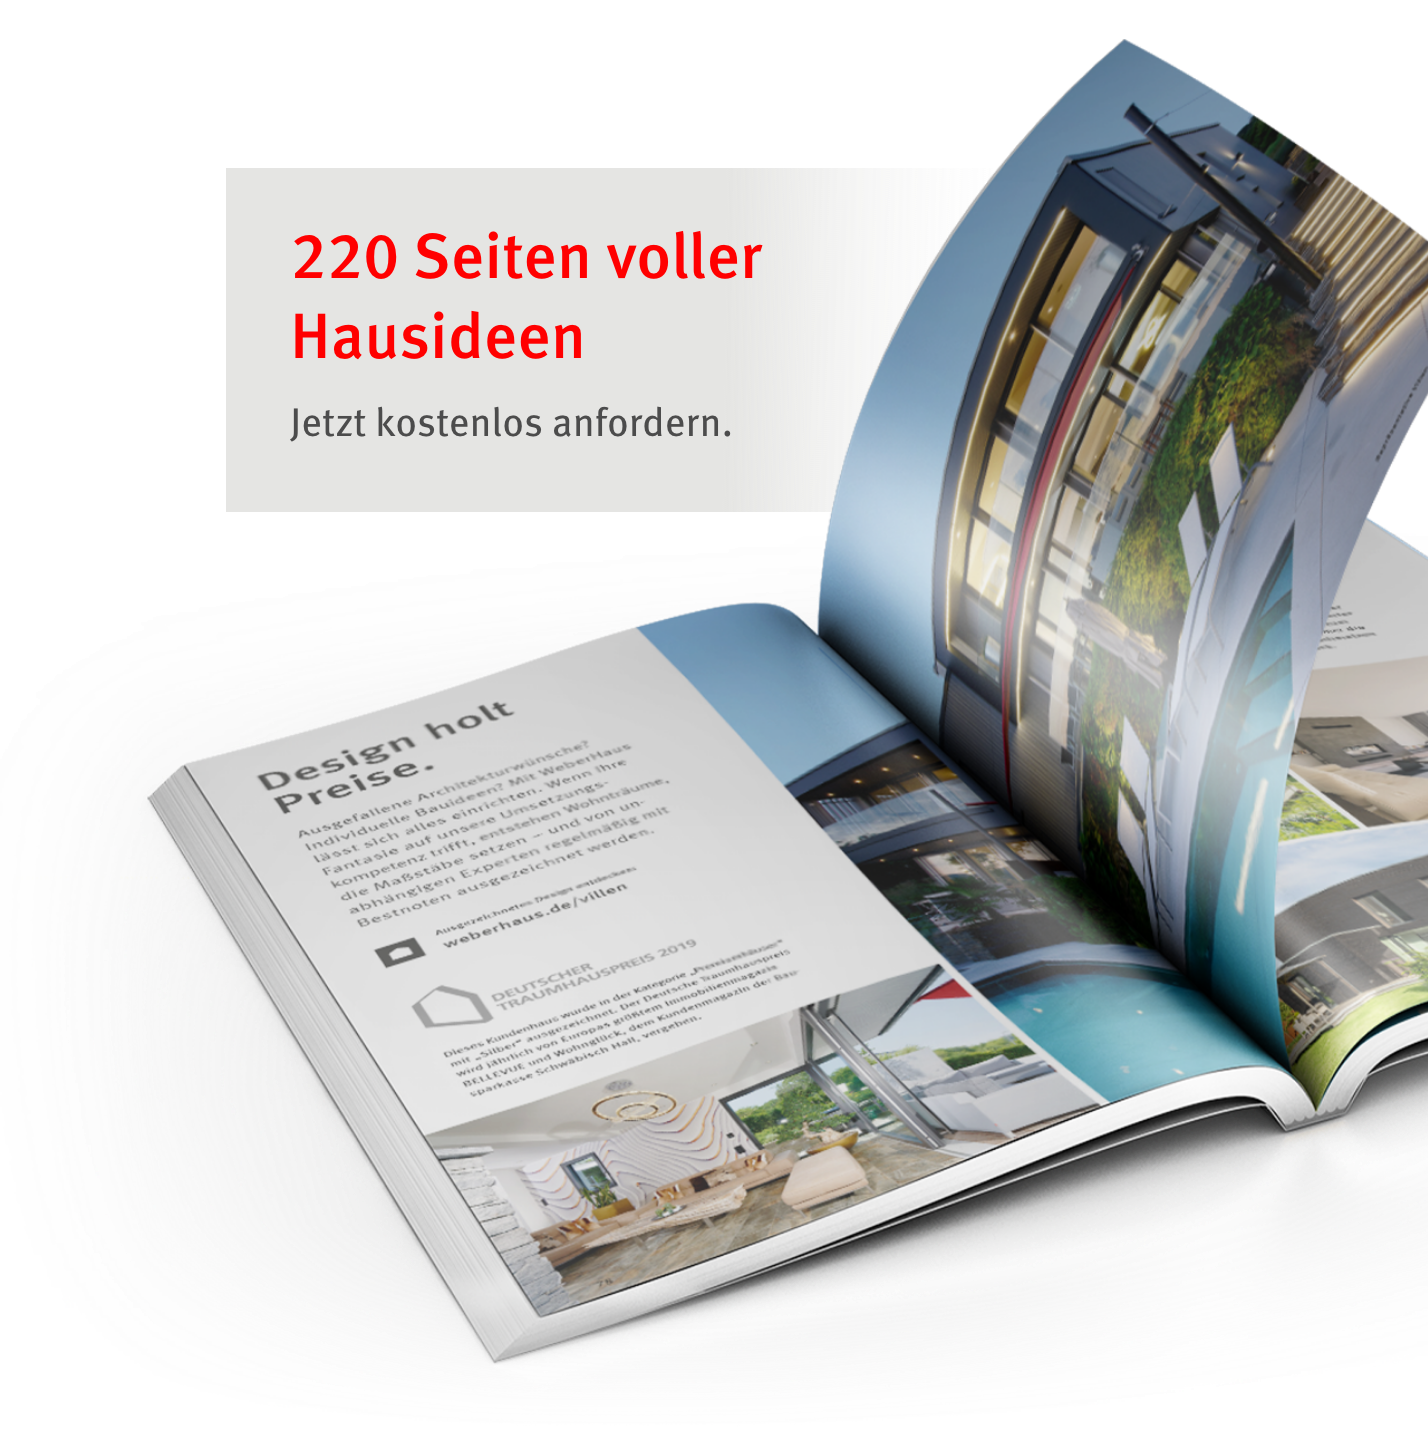 WeberHaus Magazin - 220 Seiten voller Hausideen